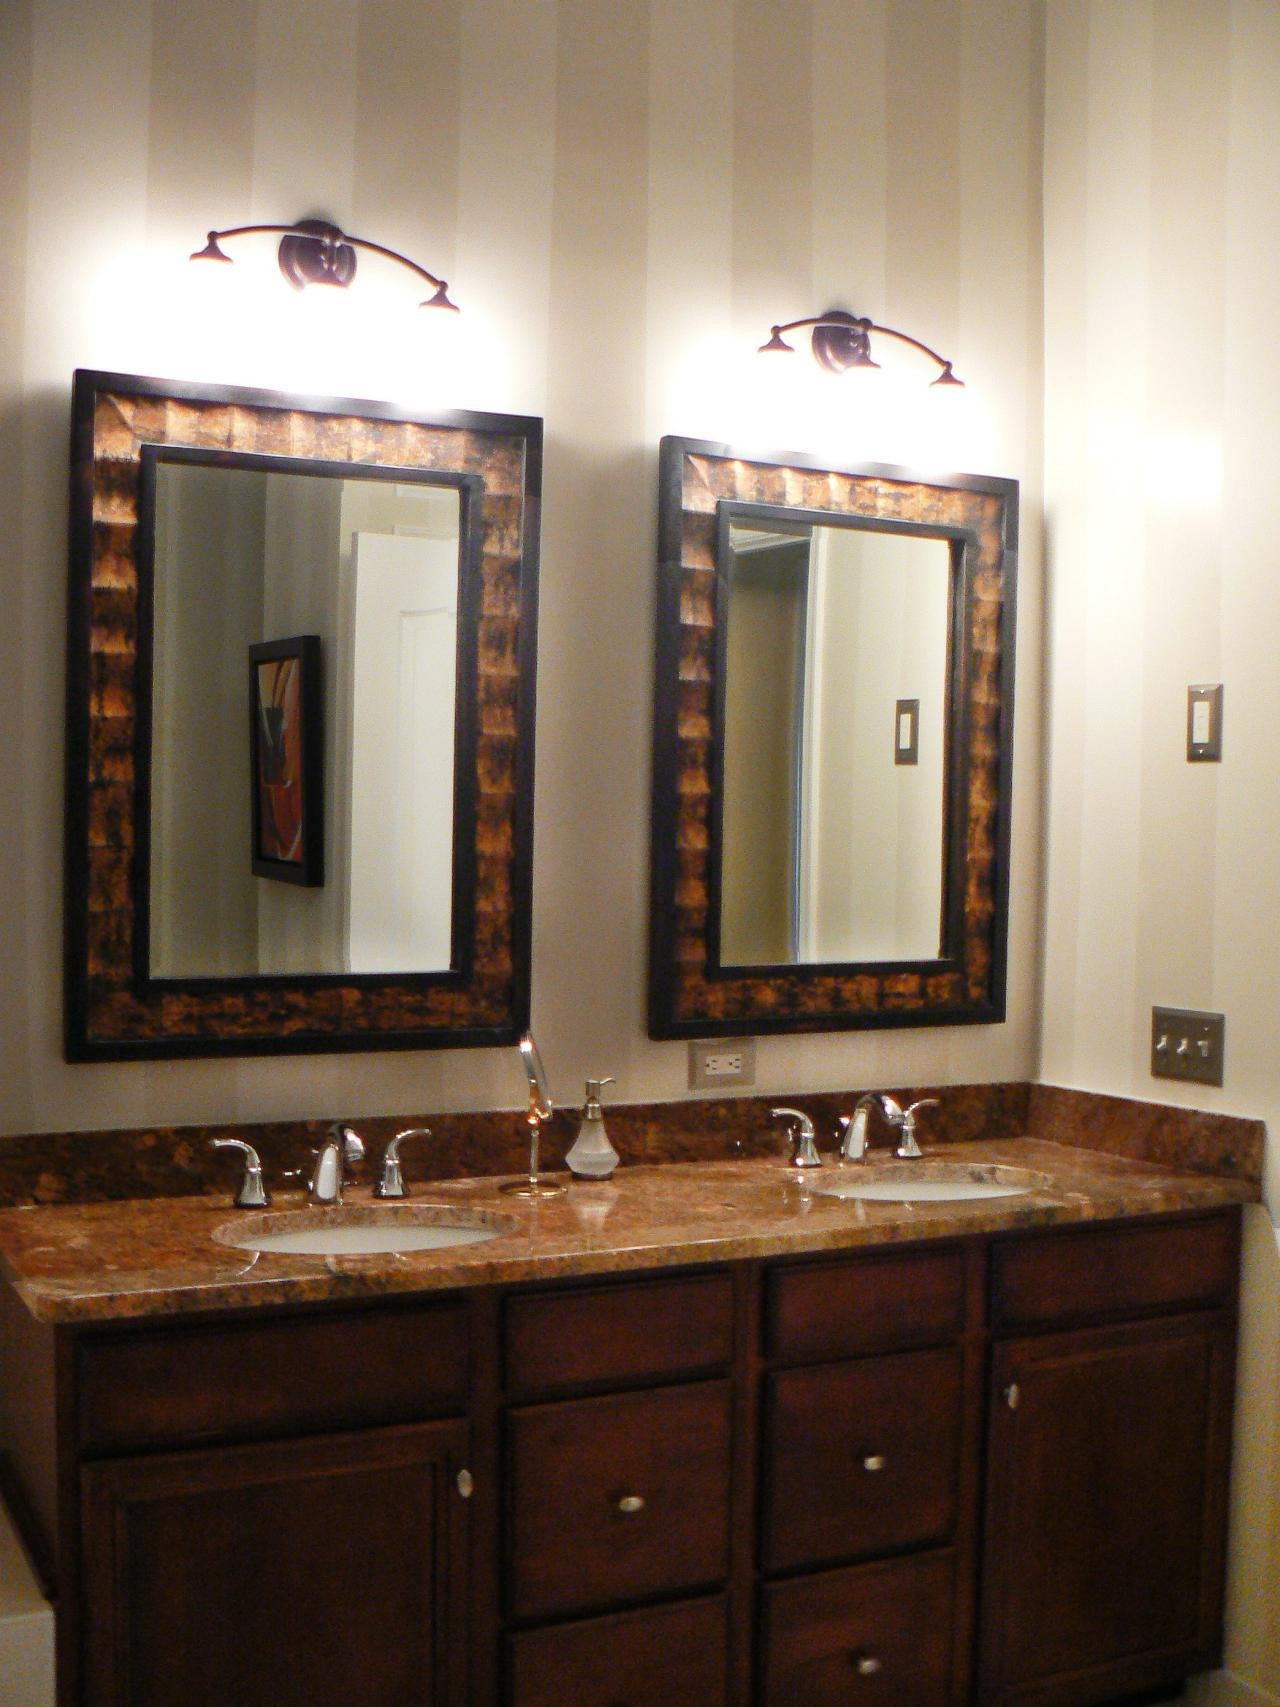 Mirrored Bathroom Vanity Cabinet
 20 Collection of Decorative Mirrors for Bathroom Vanity